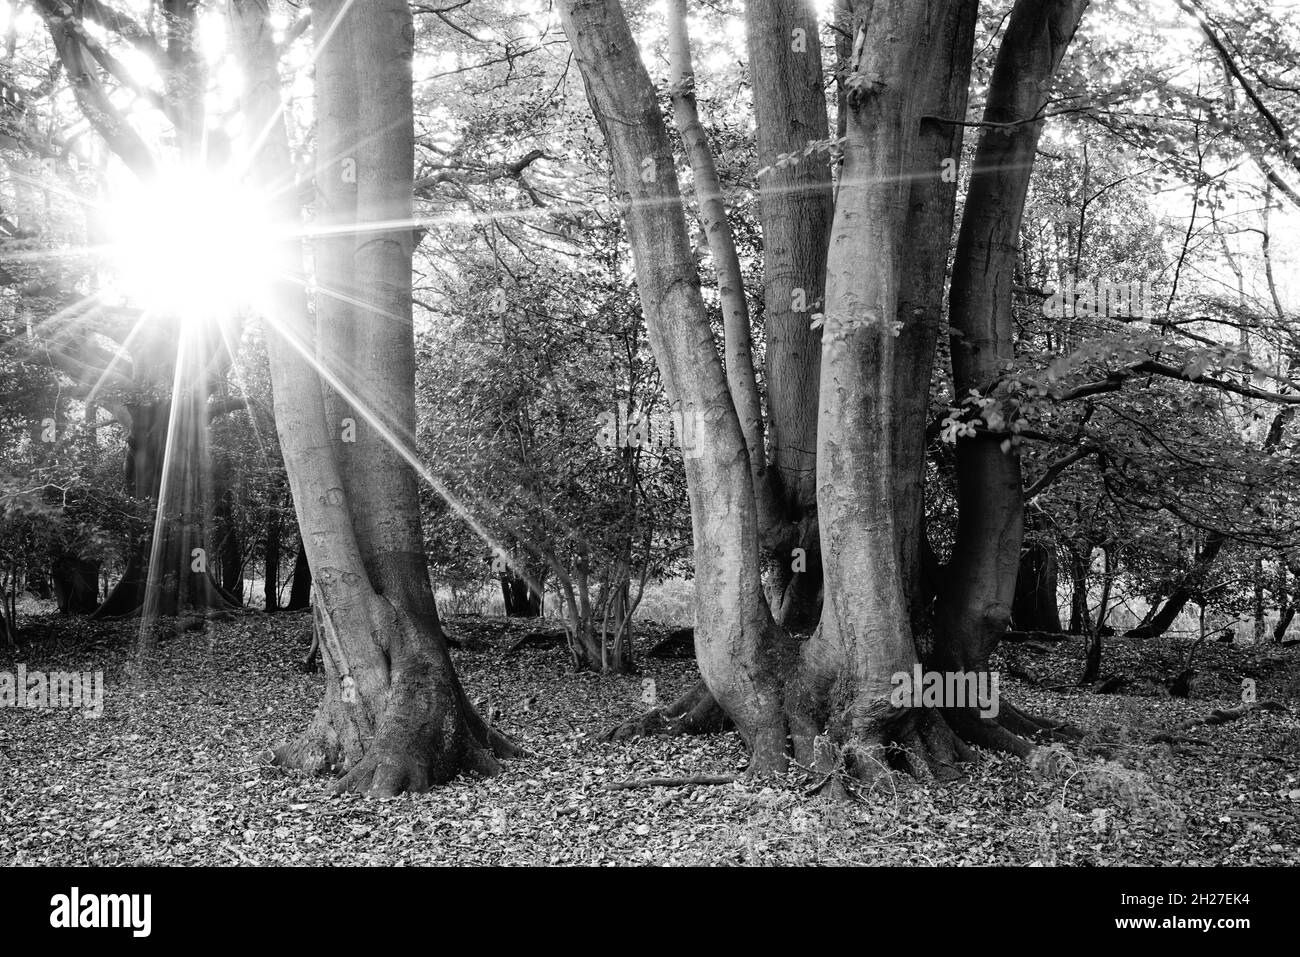 Sunburst through woodland trees in high contrast black & white. Stock Photo